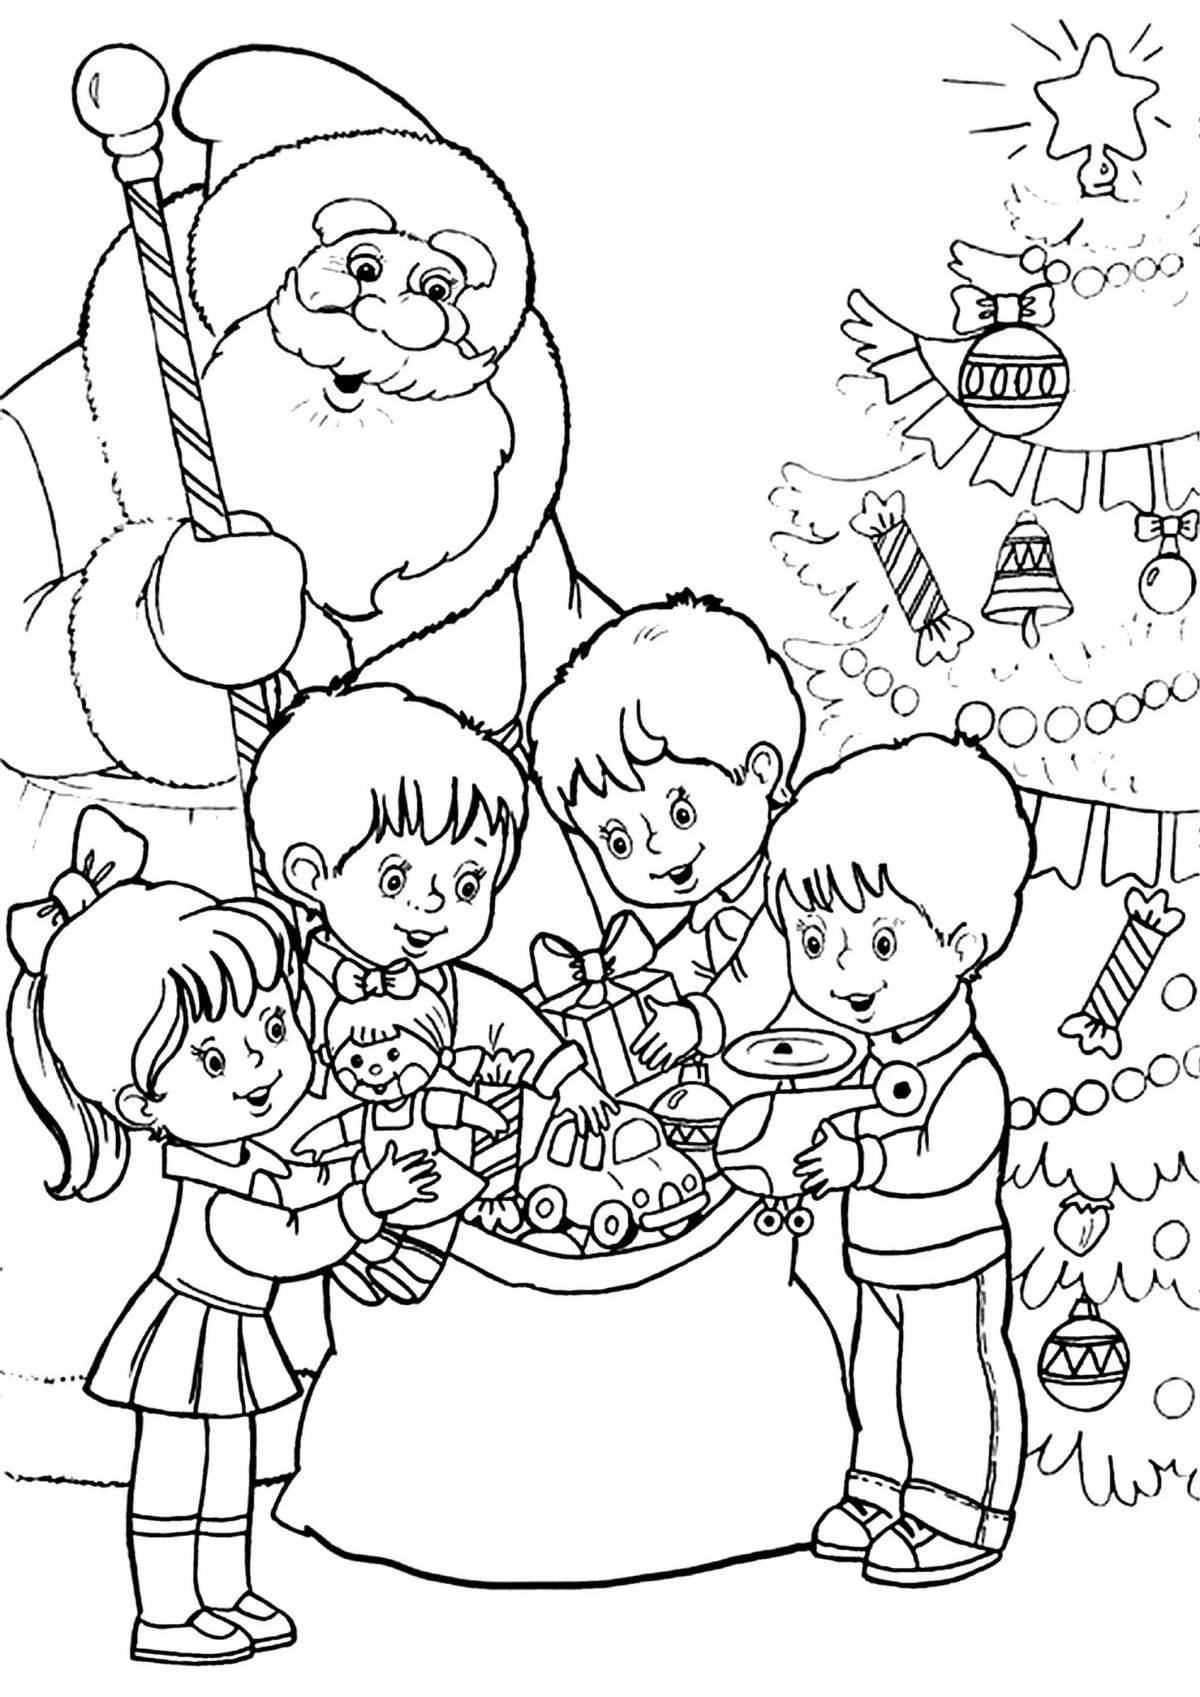 Adorable Christmas coloring book